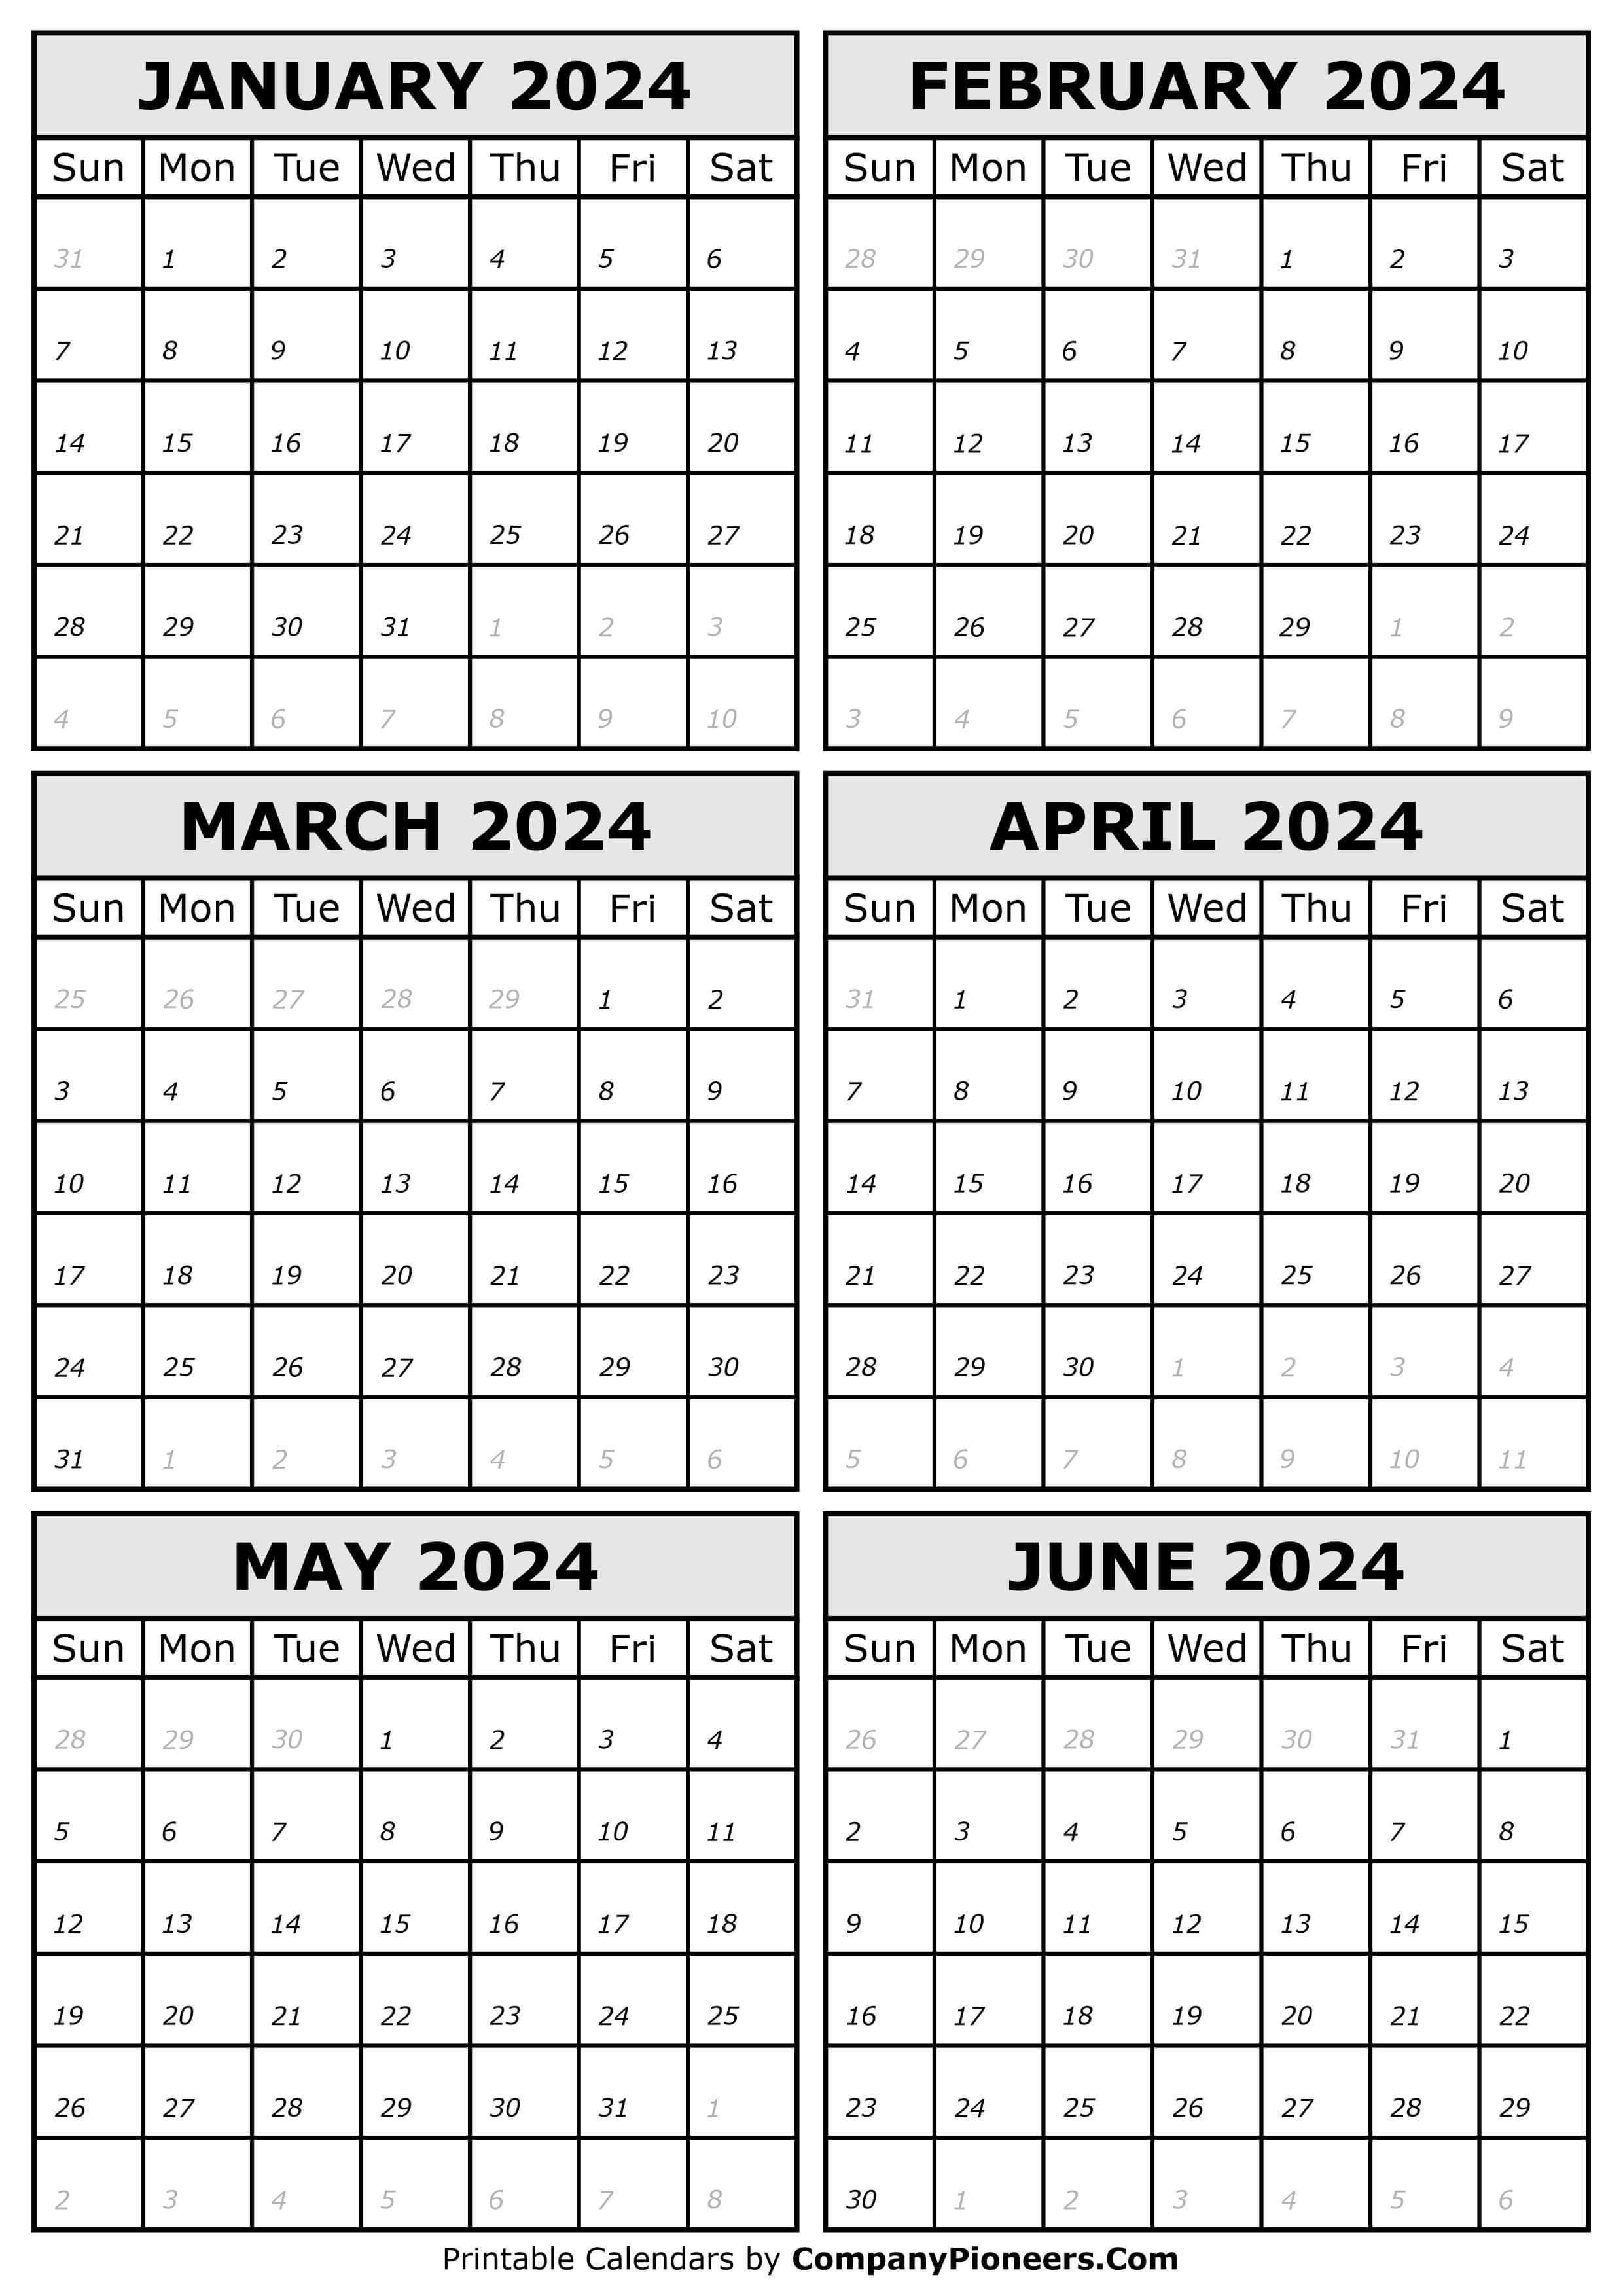 2024 January to 2024 June Calendar